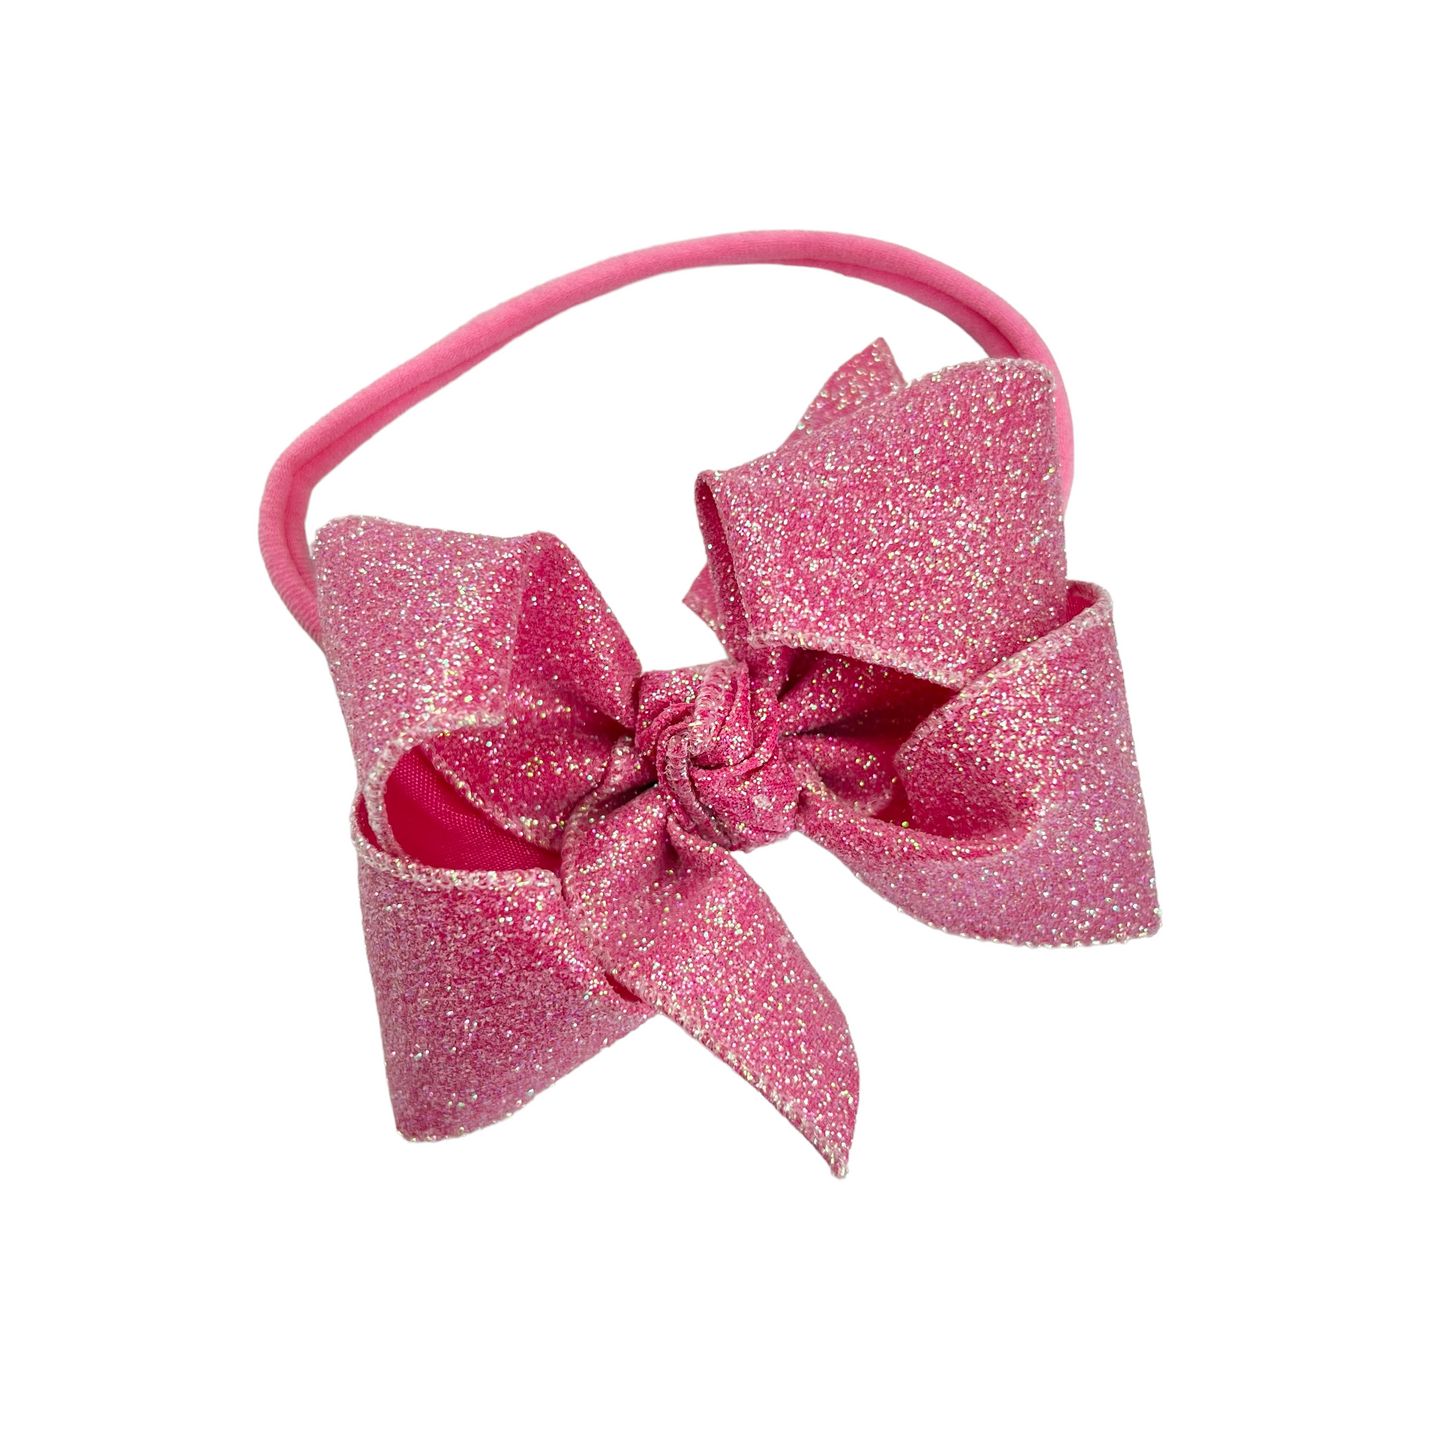 Glitter Metallic Bow - Fuchsia pink